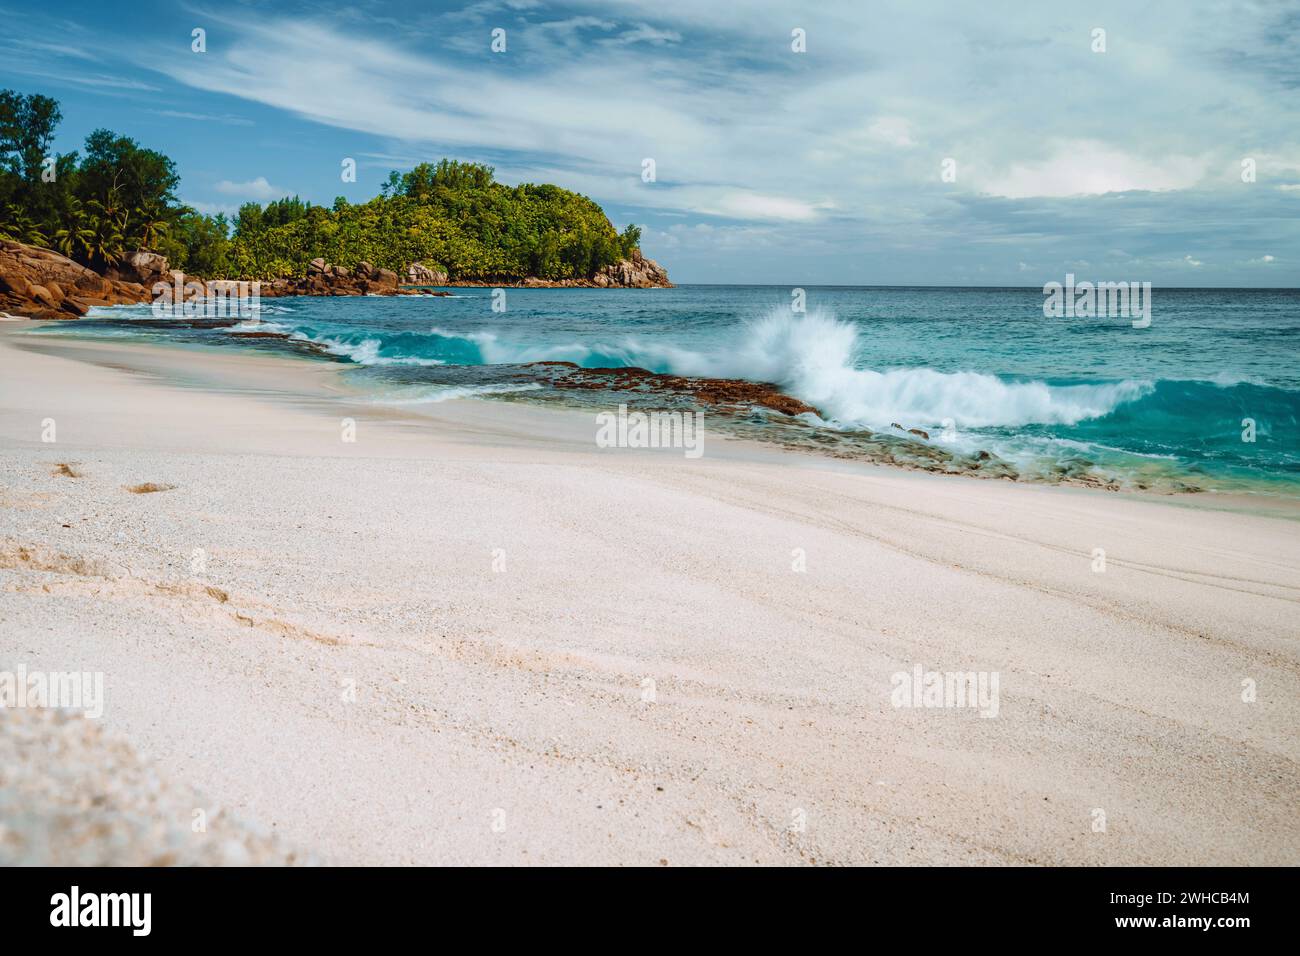 Wave hitting old corals coast at beautiful beach Anse Bazarca, seychelles. Stock Photo